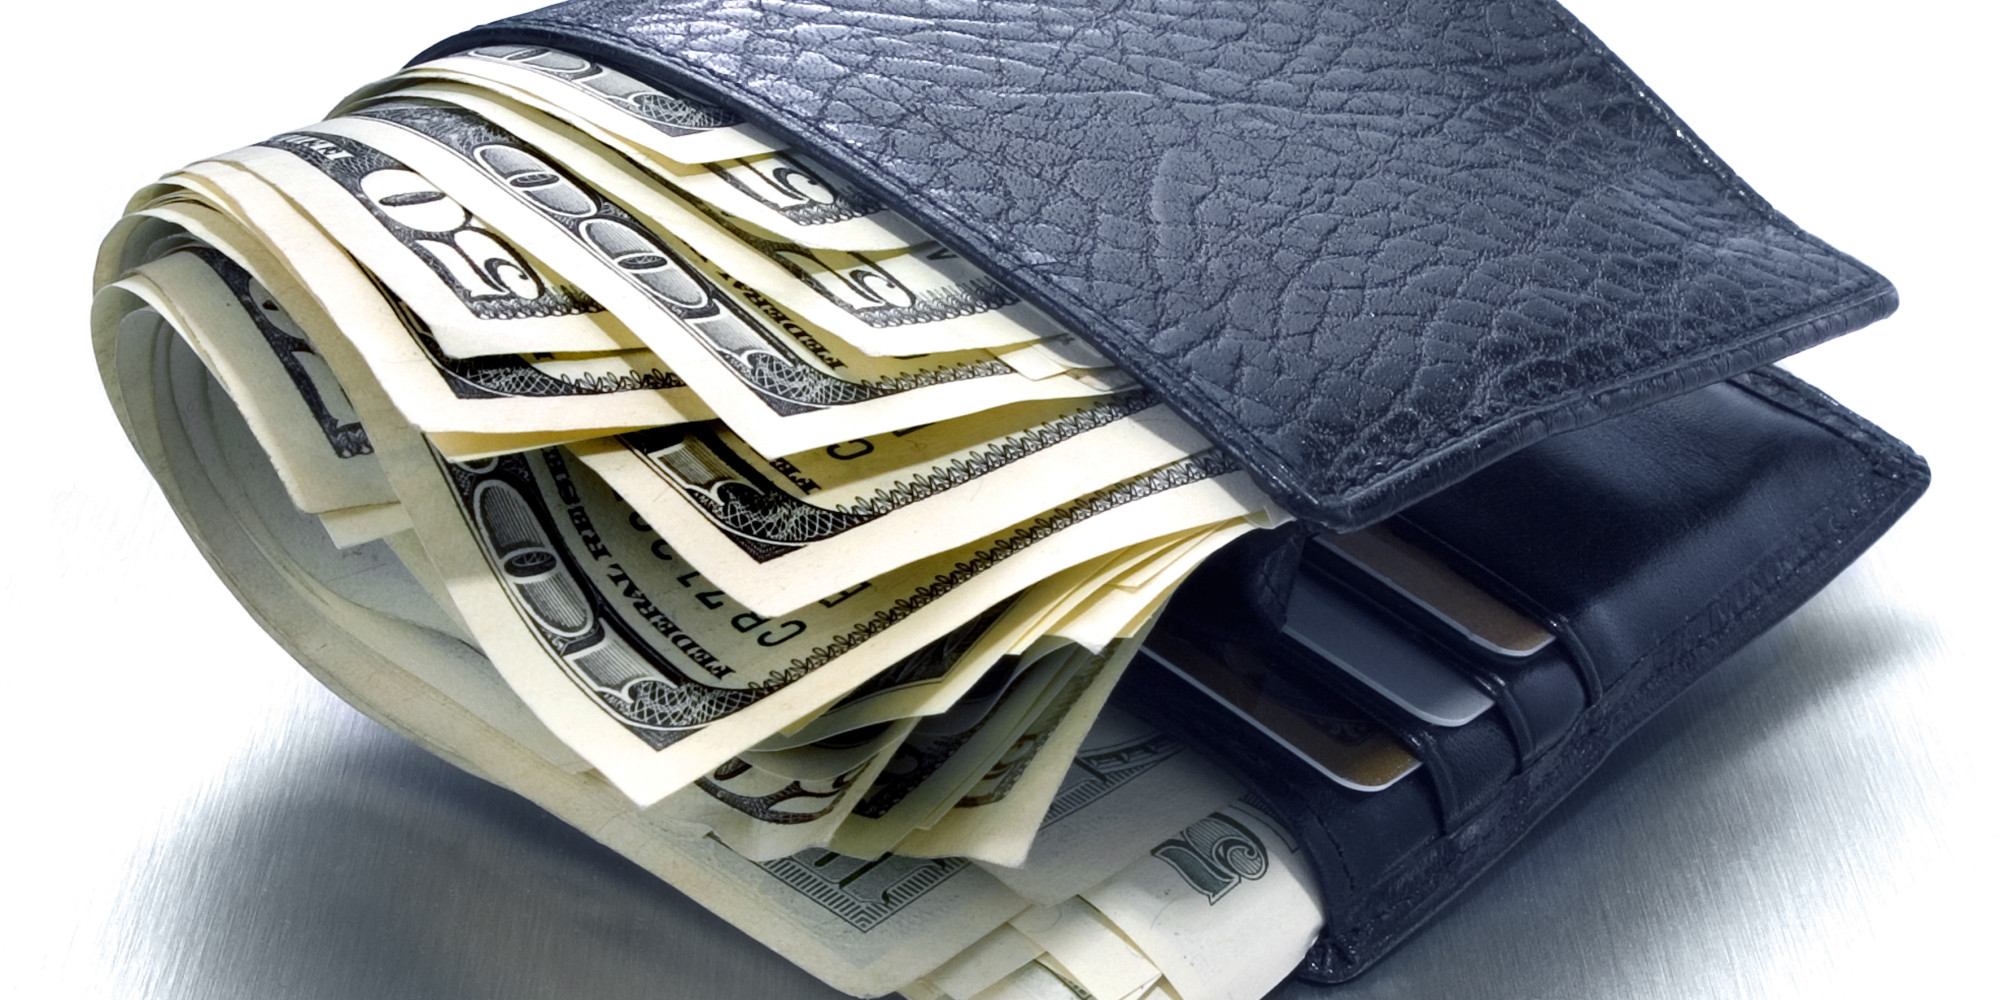 Fat wallet; big paycheck - board members didn't say a word. (photo-fair use)